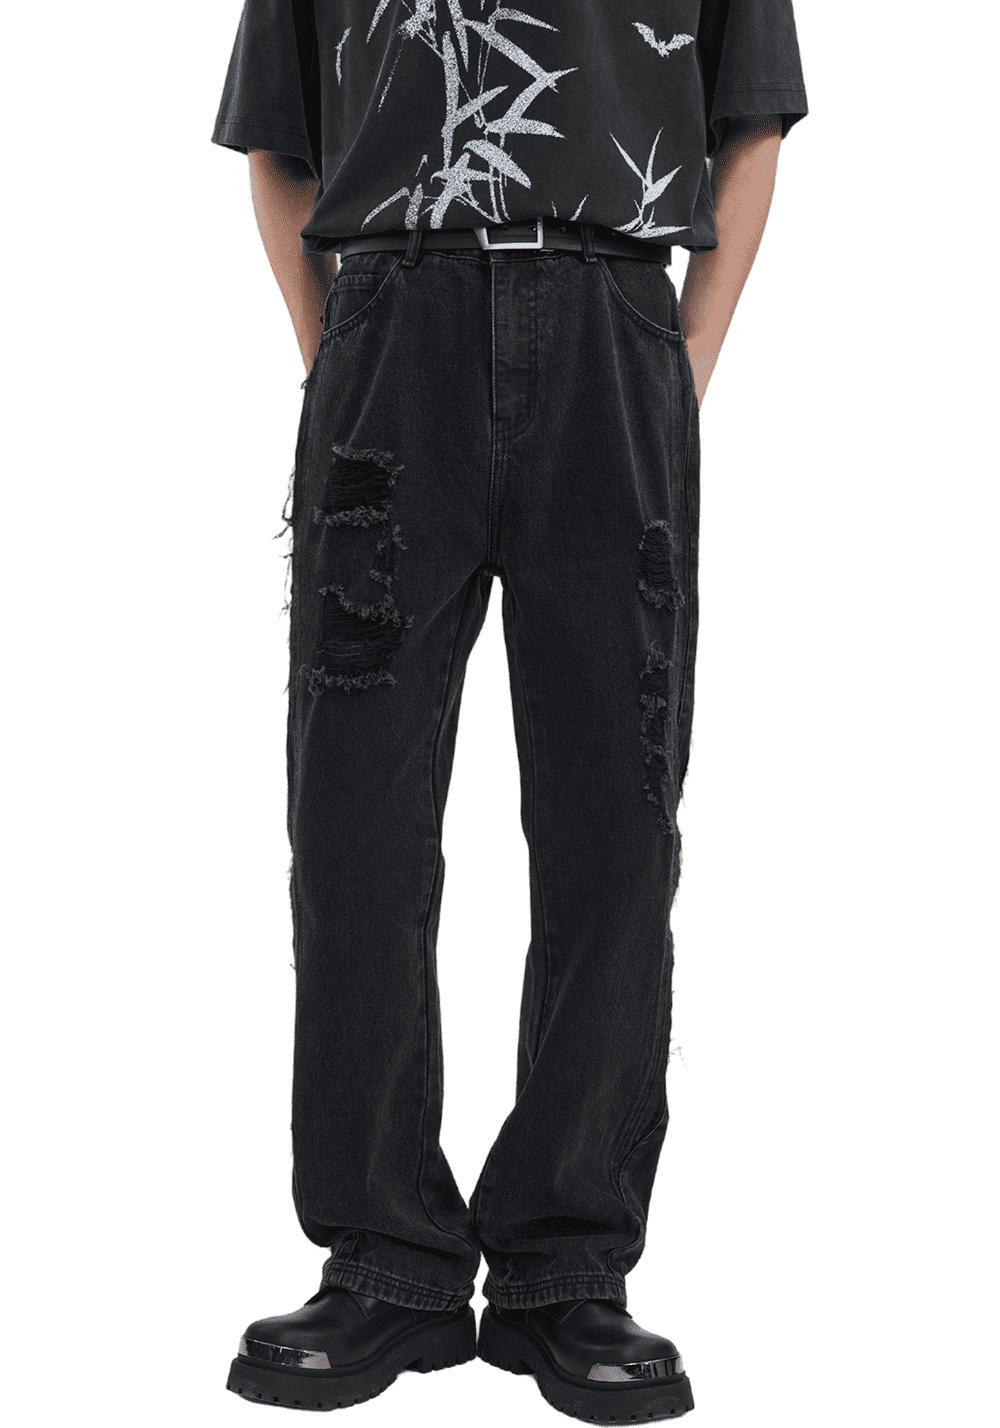 Patchwork Raw Edge Jeans - PSYLOS 1, Patchwork Raw Edge Jeans, Pants, PCLP, PSYLOS 1